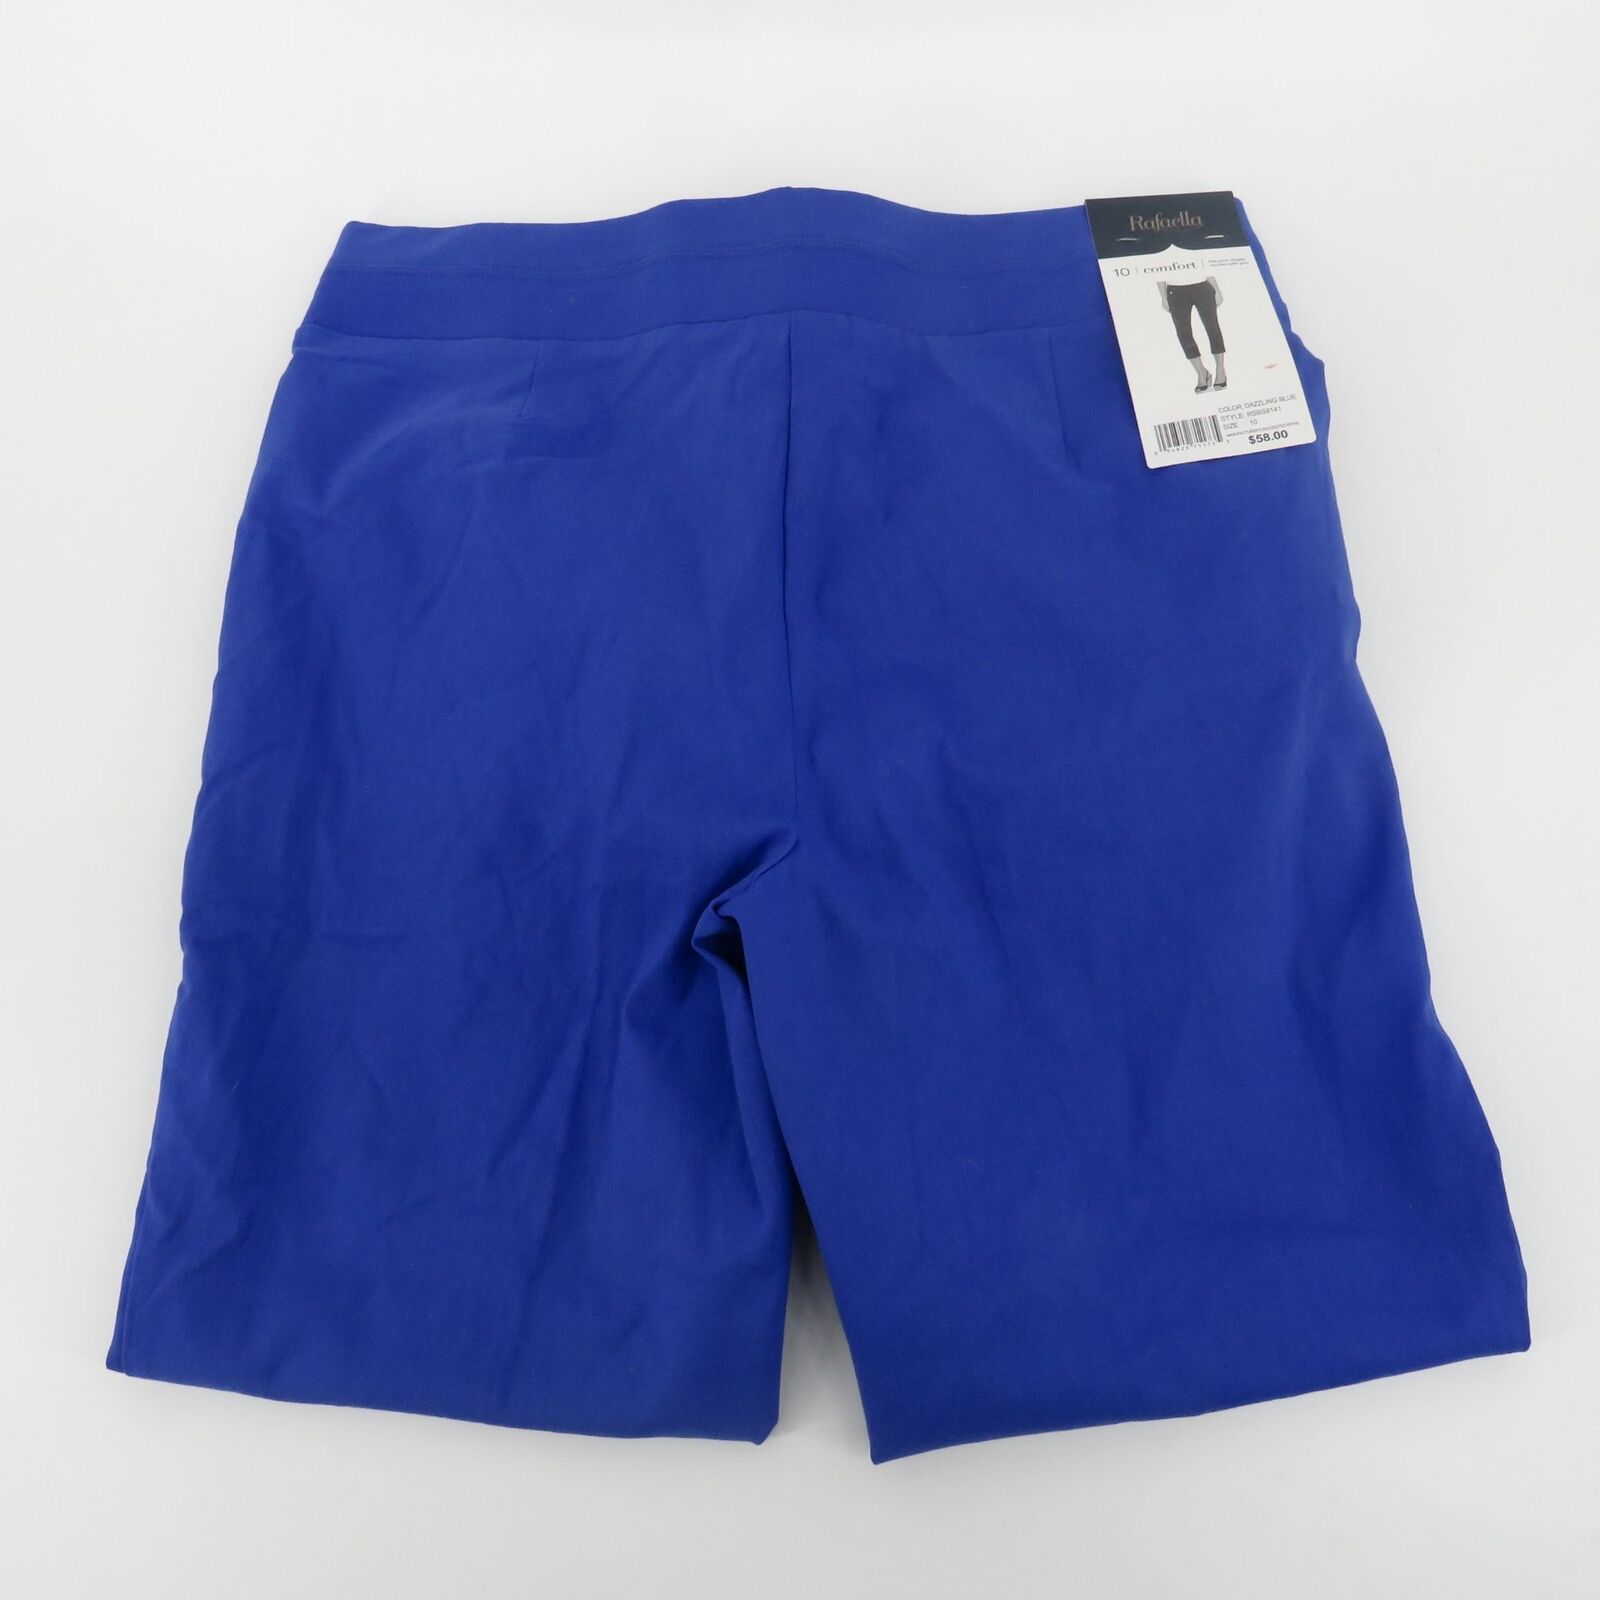 Rafaella Women's Comfort Dress Casual Capri Pants Dazzling Blue Nice Bottom  $58